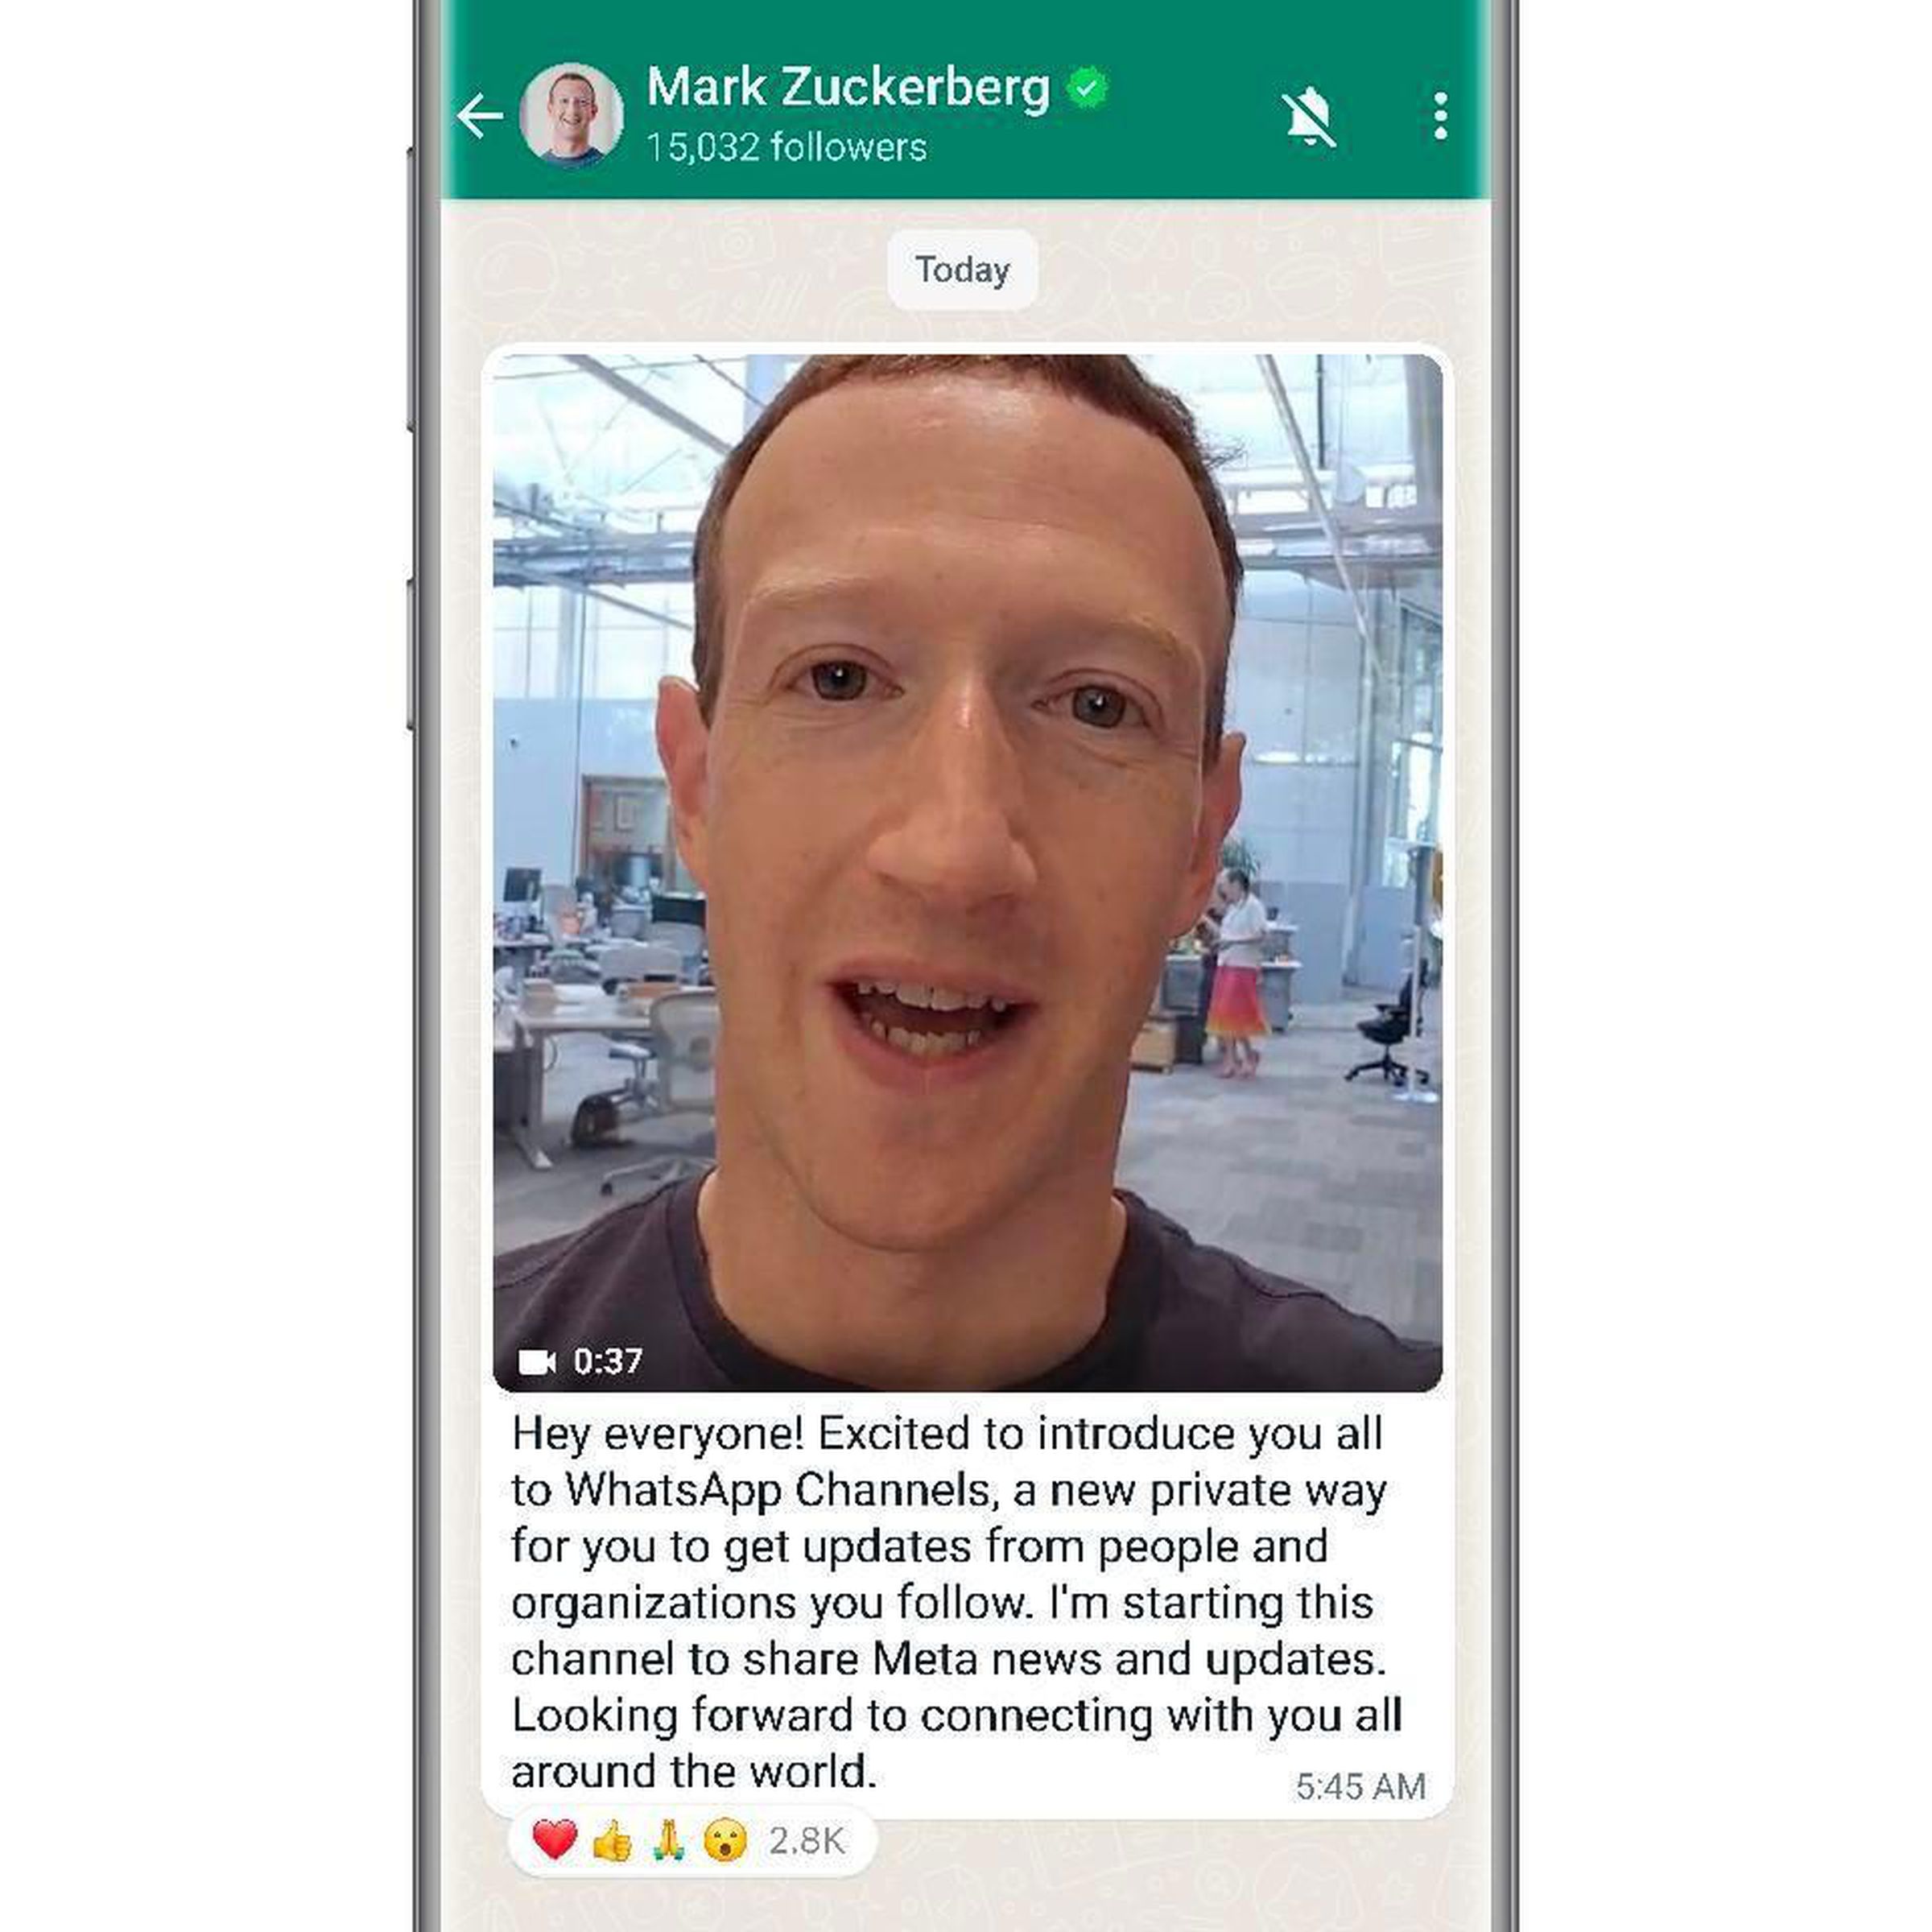 WhatsApp Channels preview from Meta CEO Mark Zuckerberg